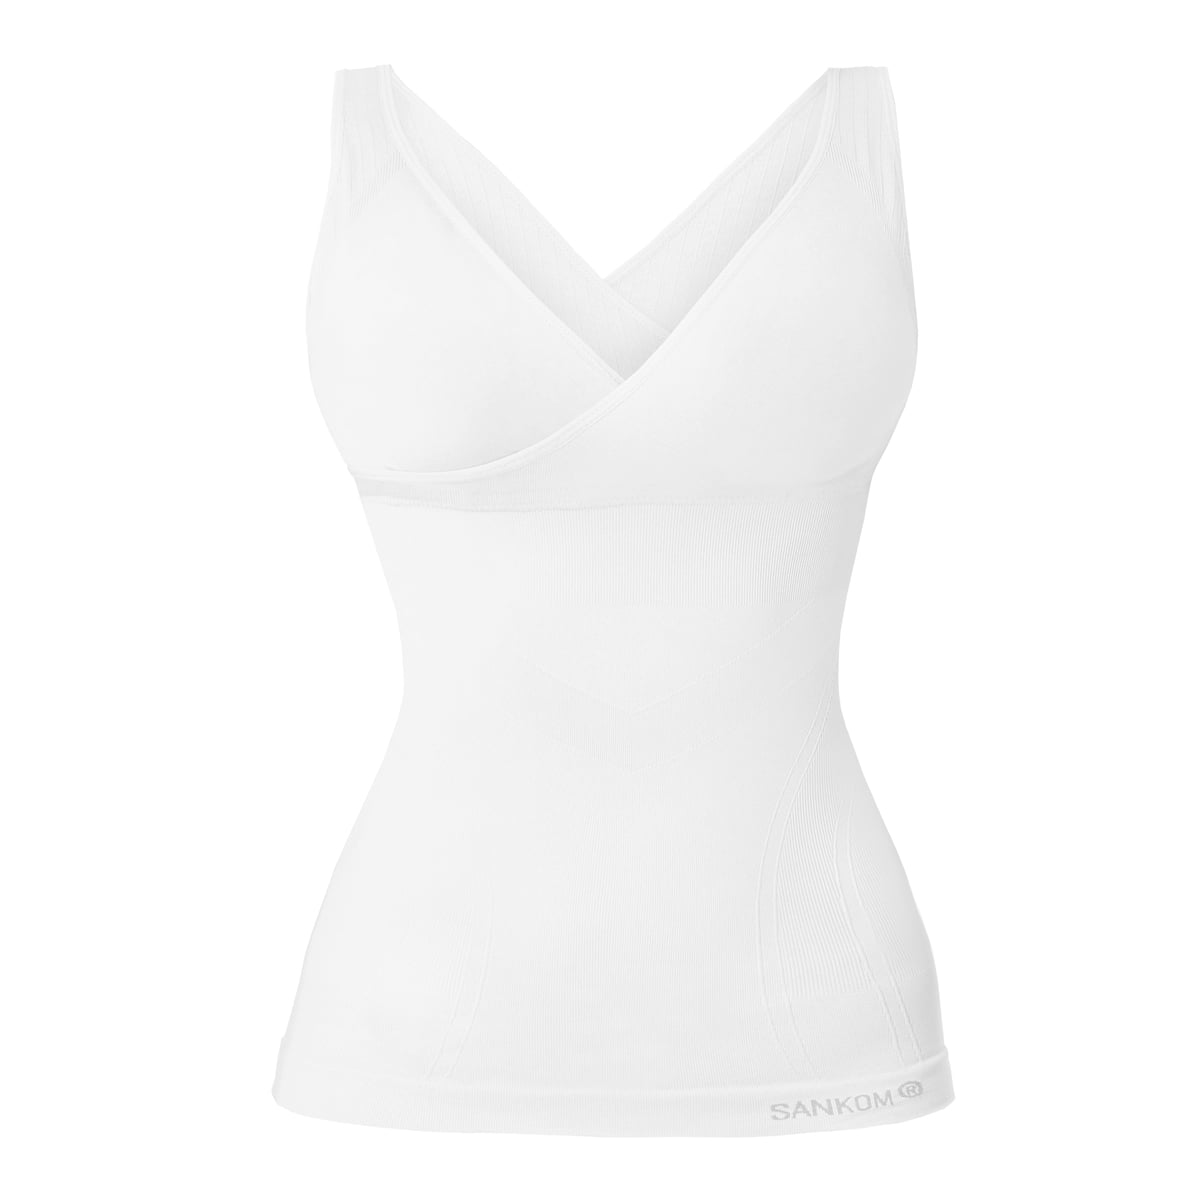 Shop LC - Shop LC SANKOM White Slimming Posture Corrector Vest Body ...